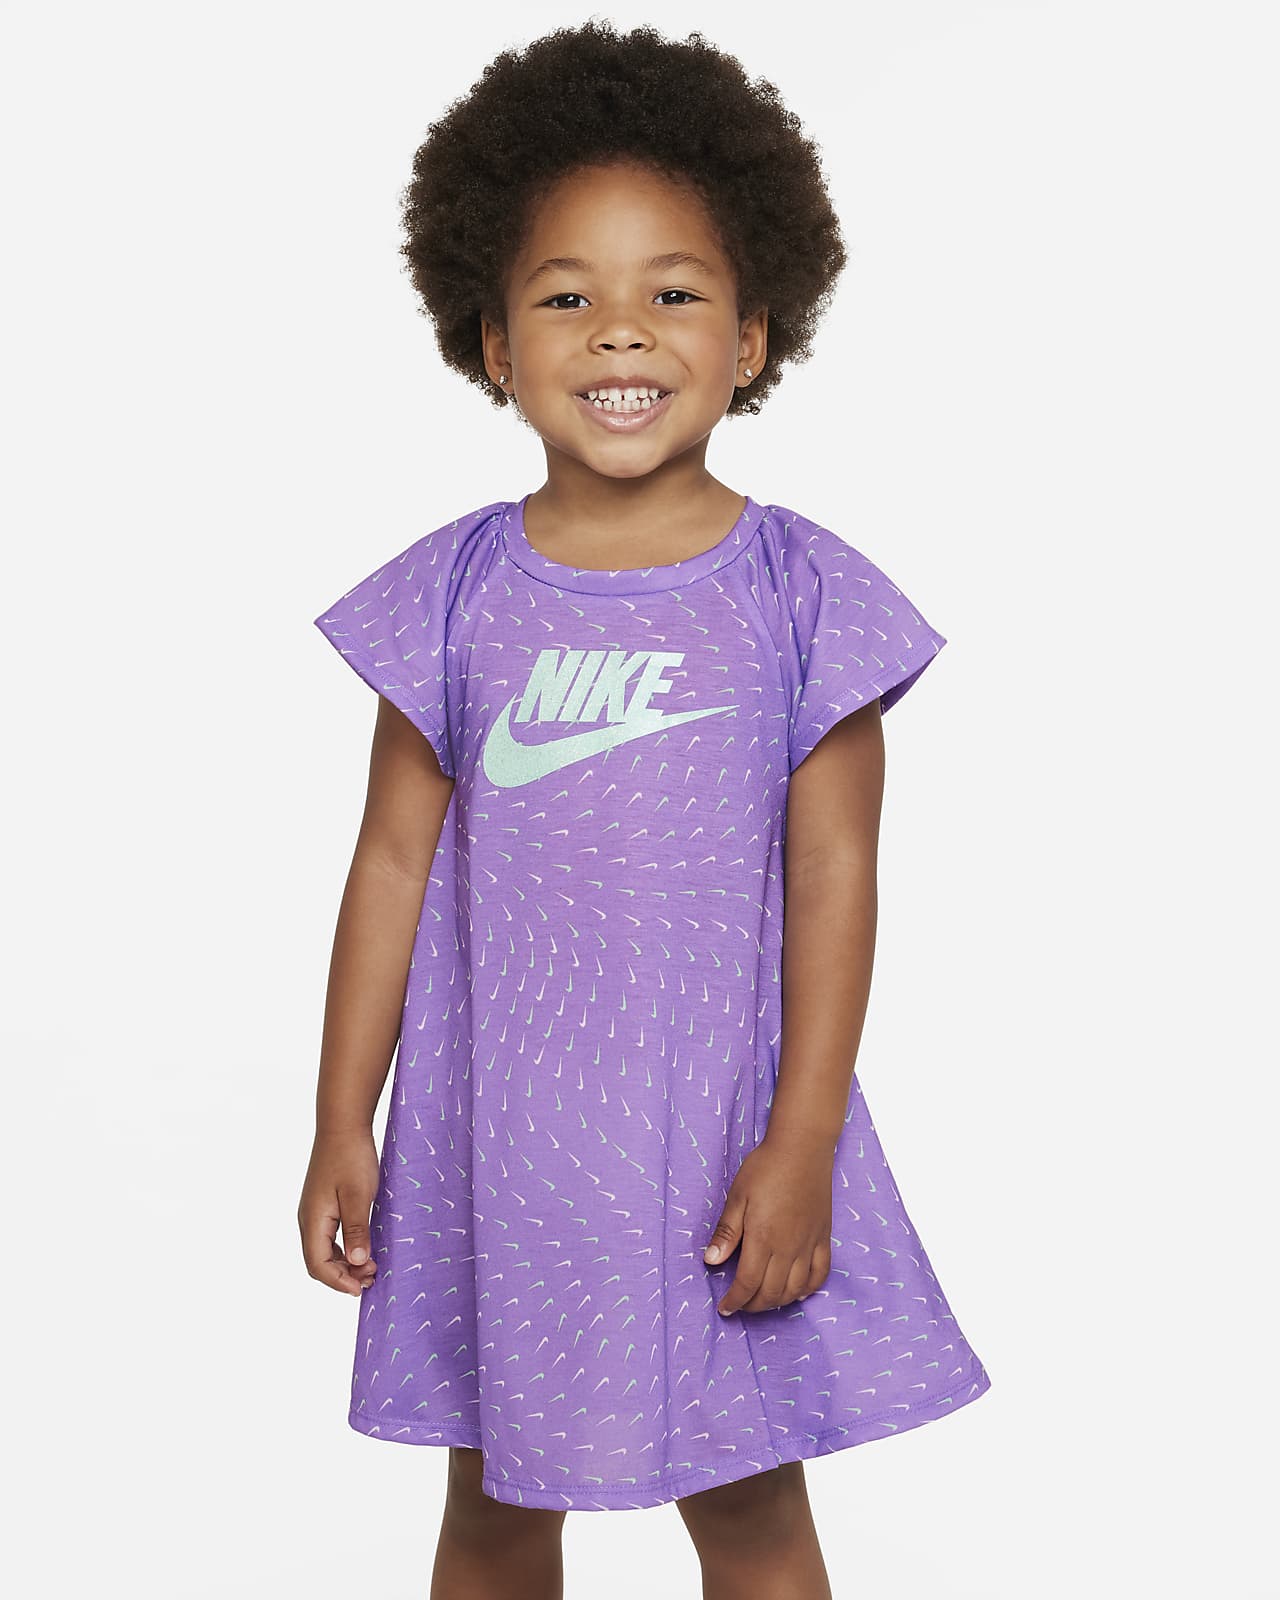 Vestido infantil Nike.com